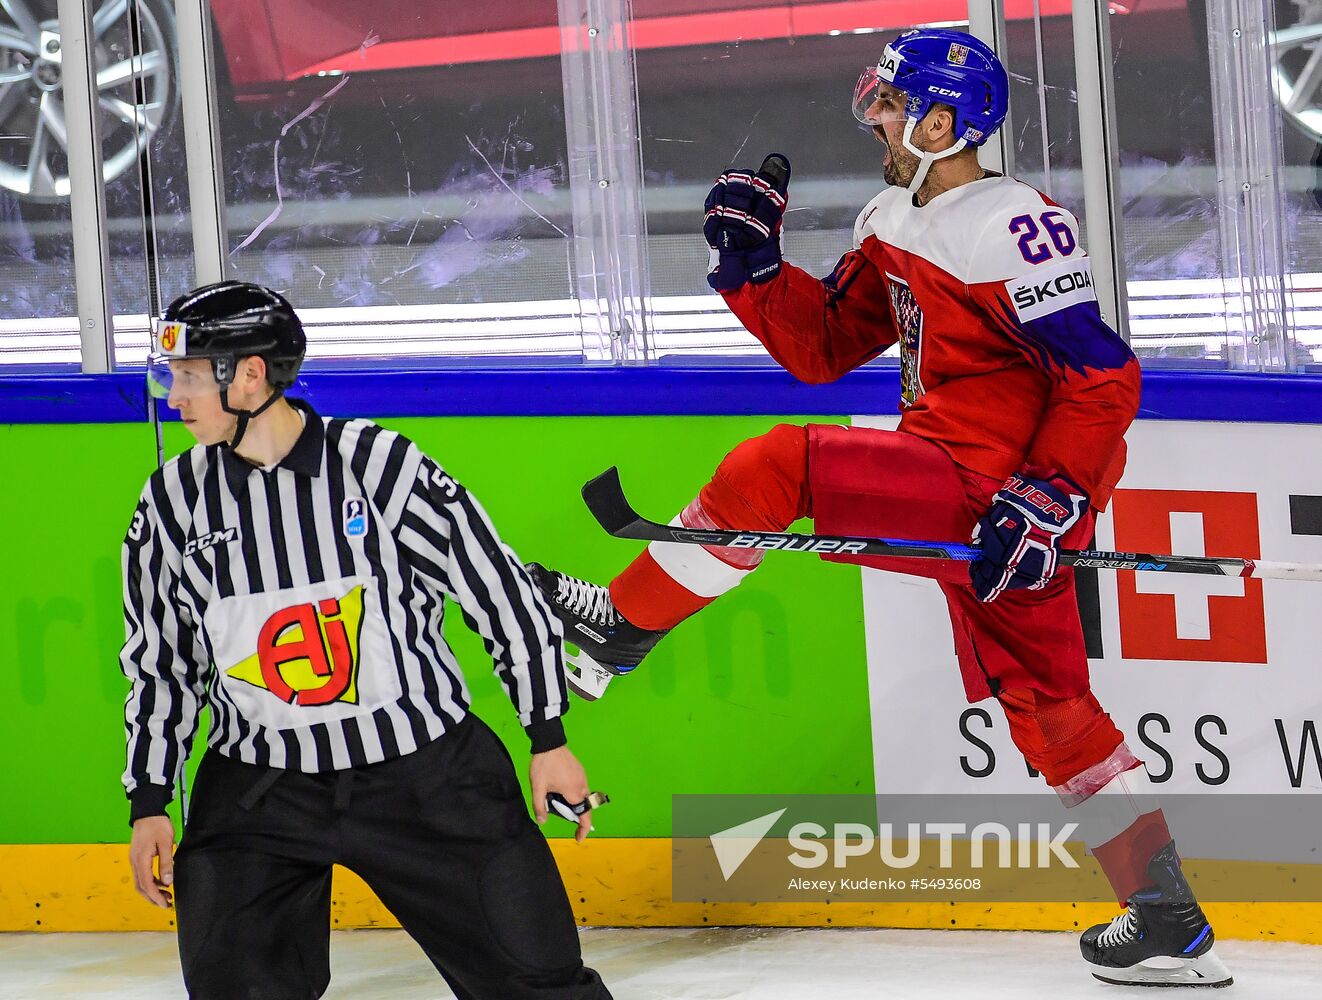 Ice Hockey World Championship. Czech Republic vs. Switzerland